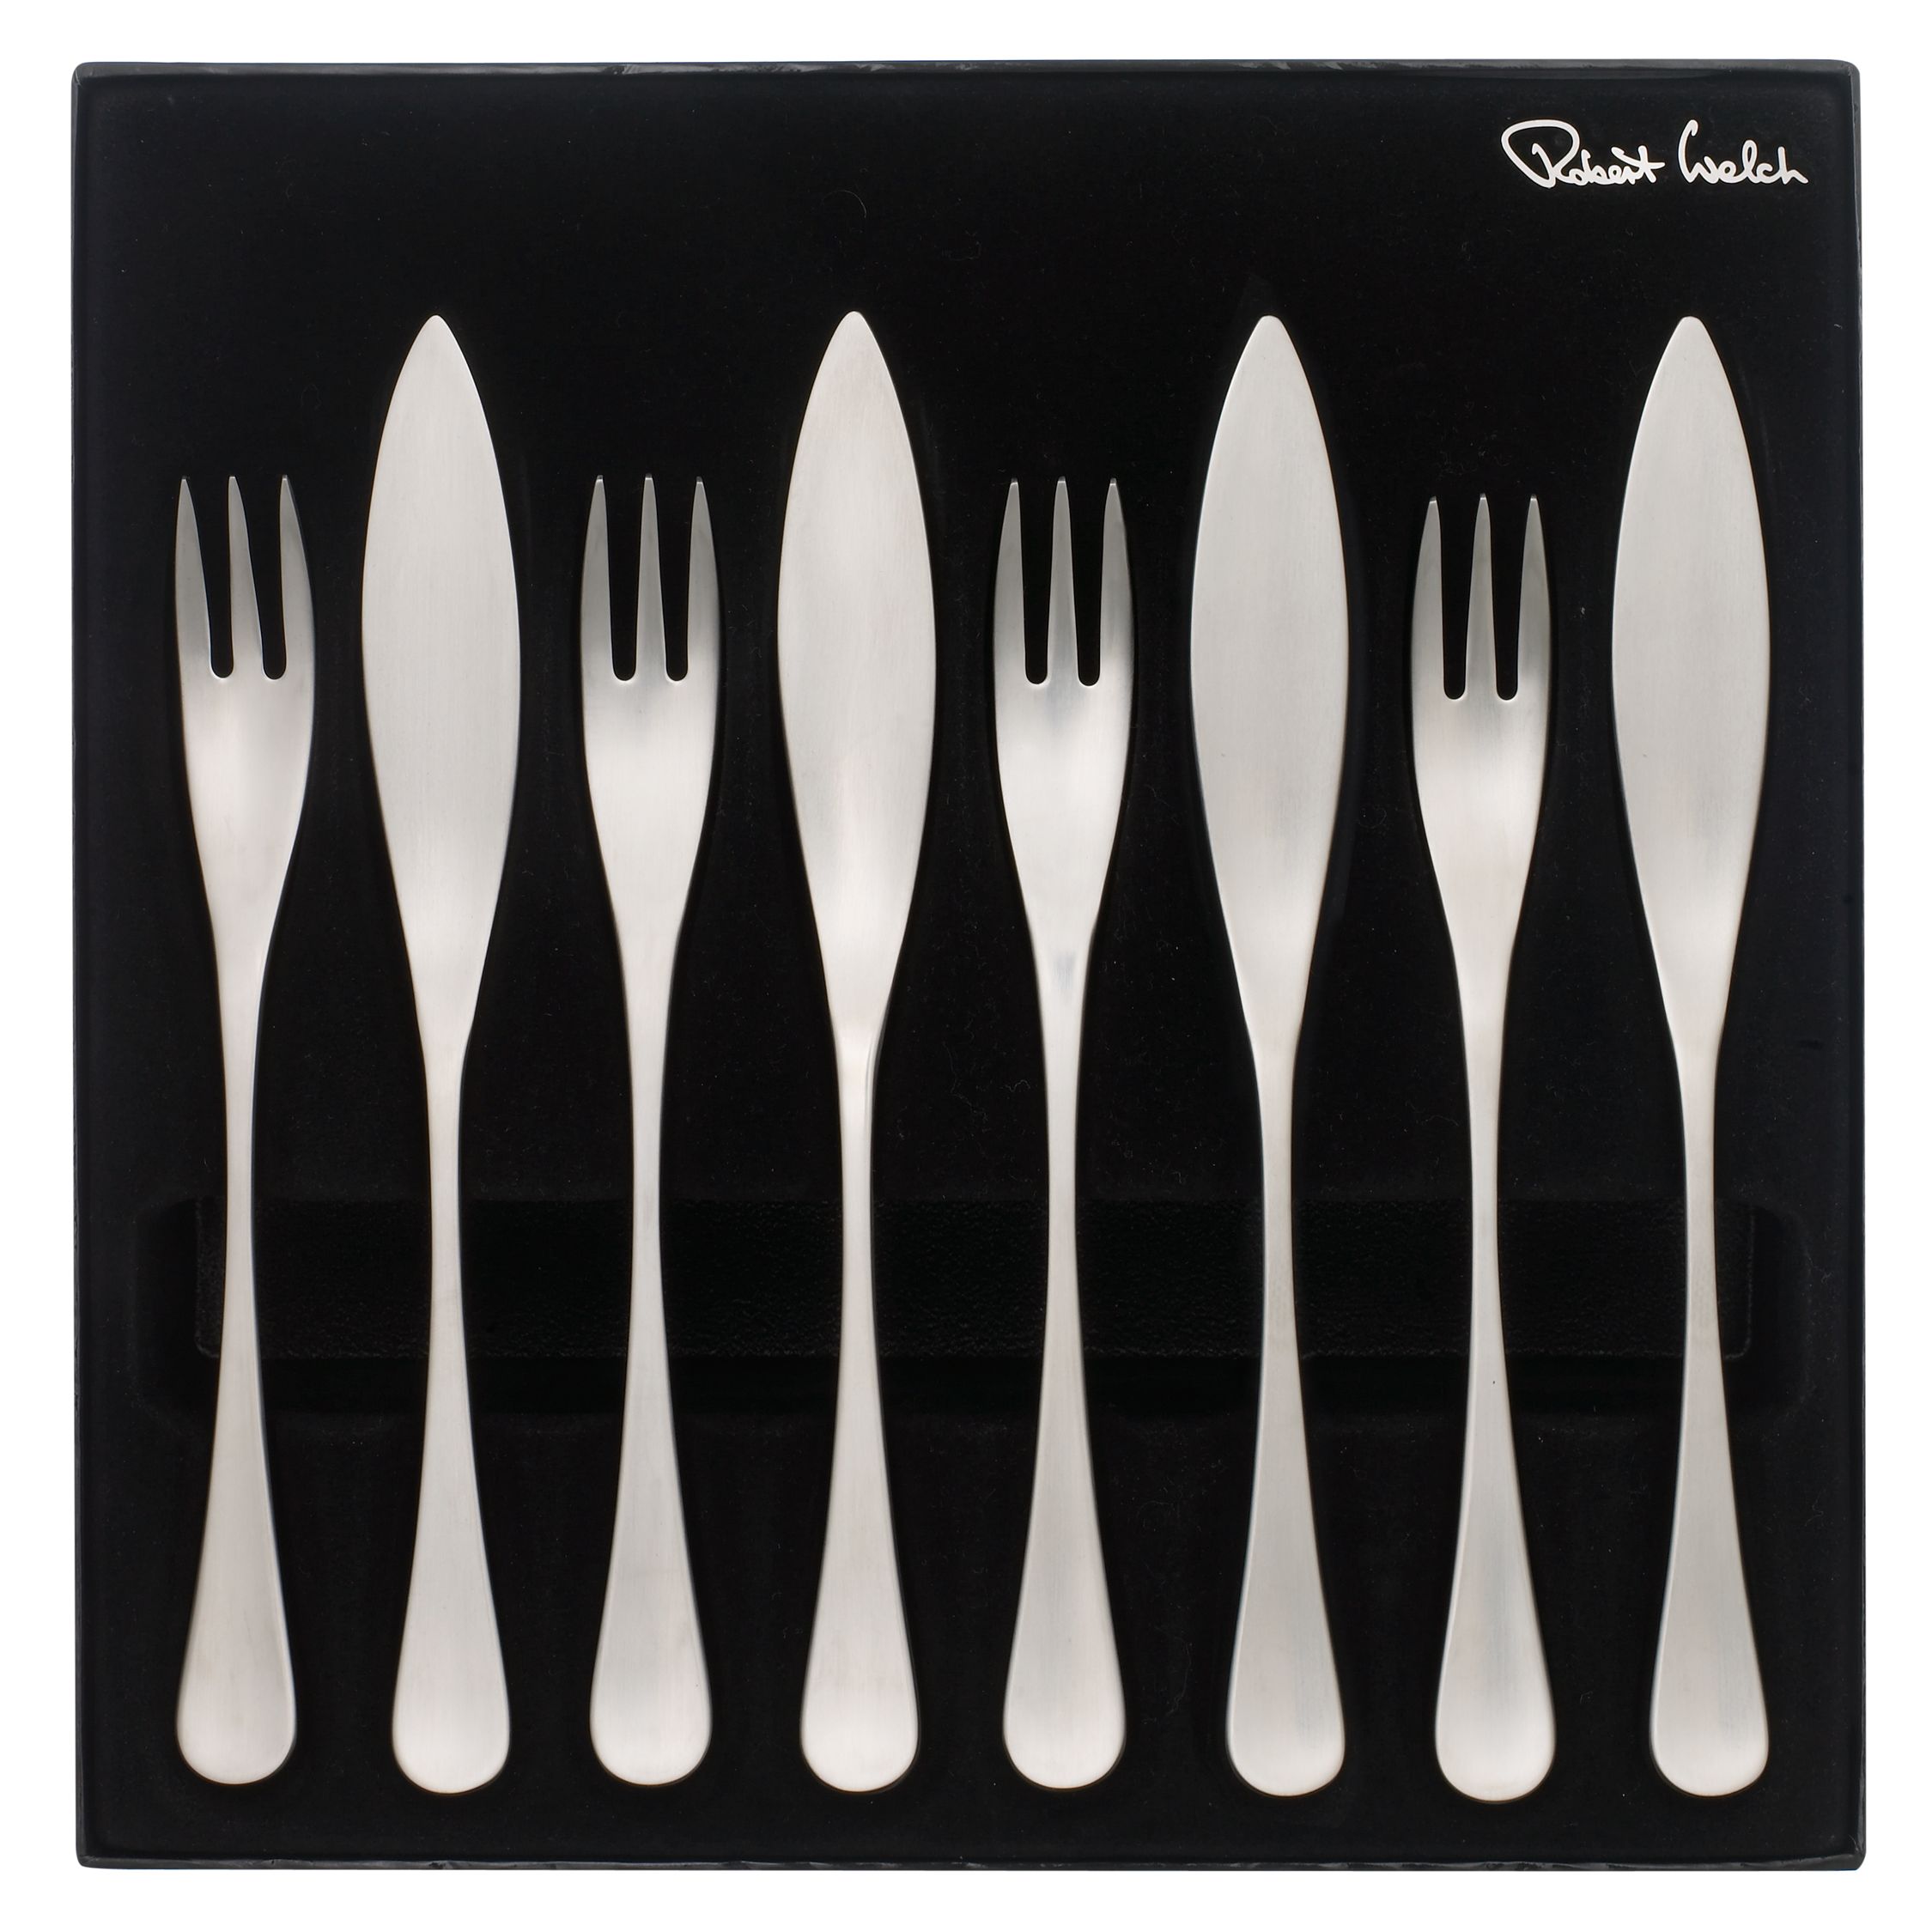 Robert Welch RWII Fish Cutlery Set